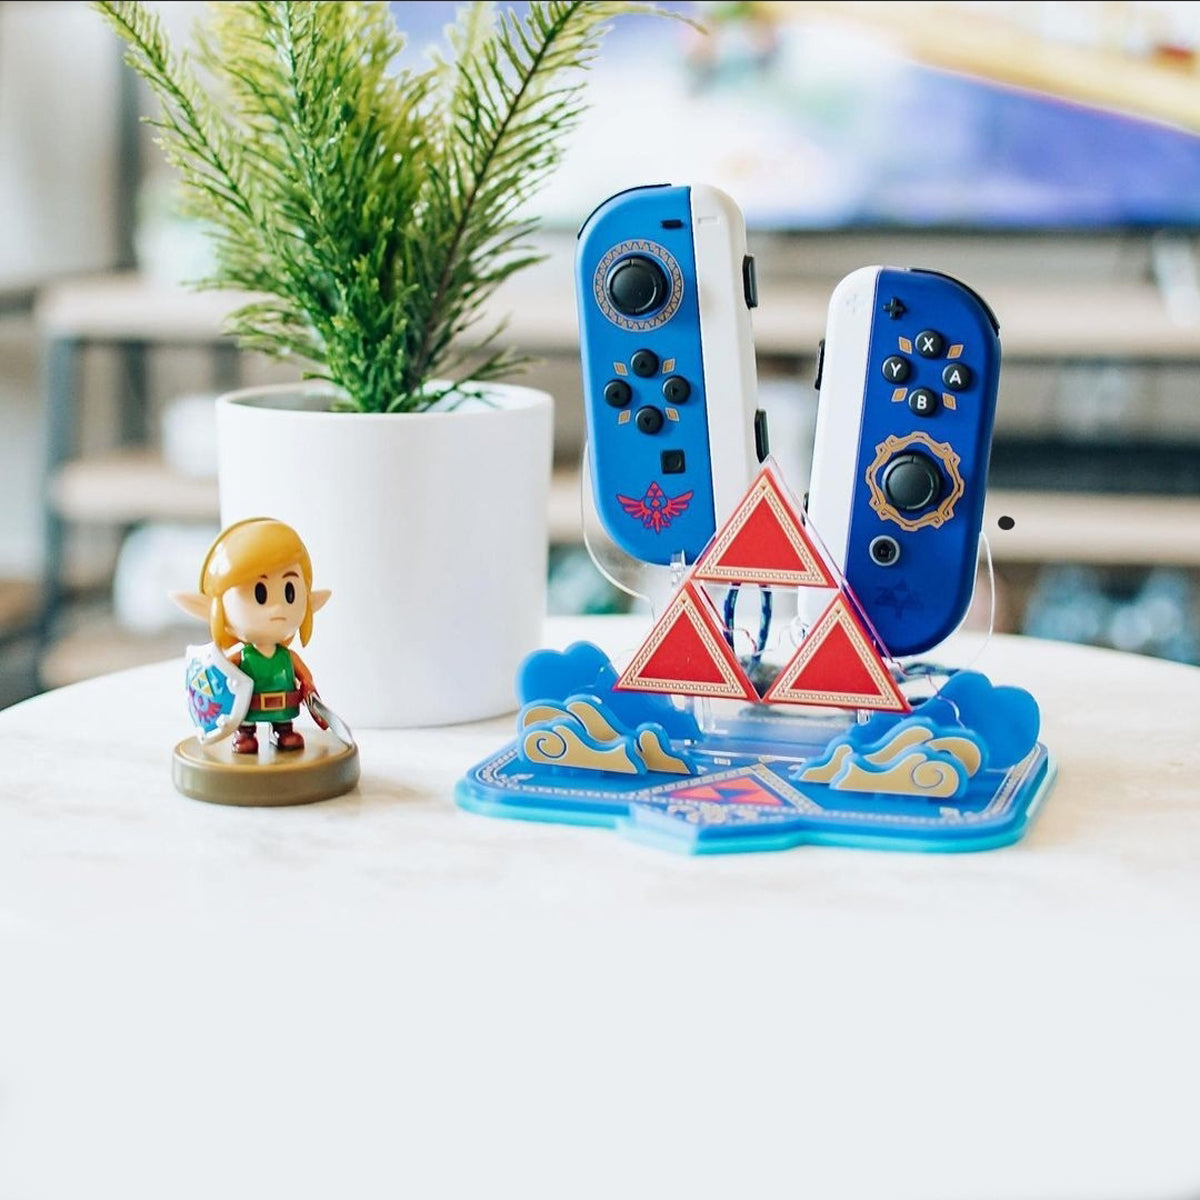 Zelda Skyward Sword Joy Cons Display – Rose Colored Gaming